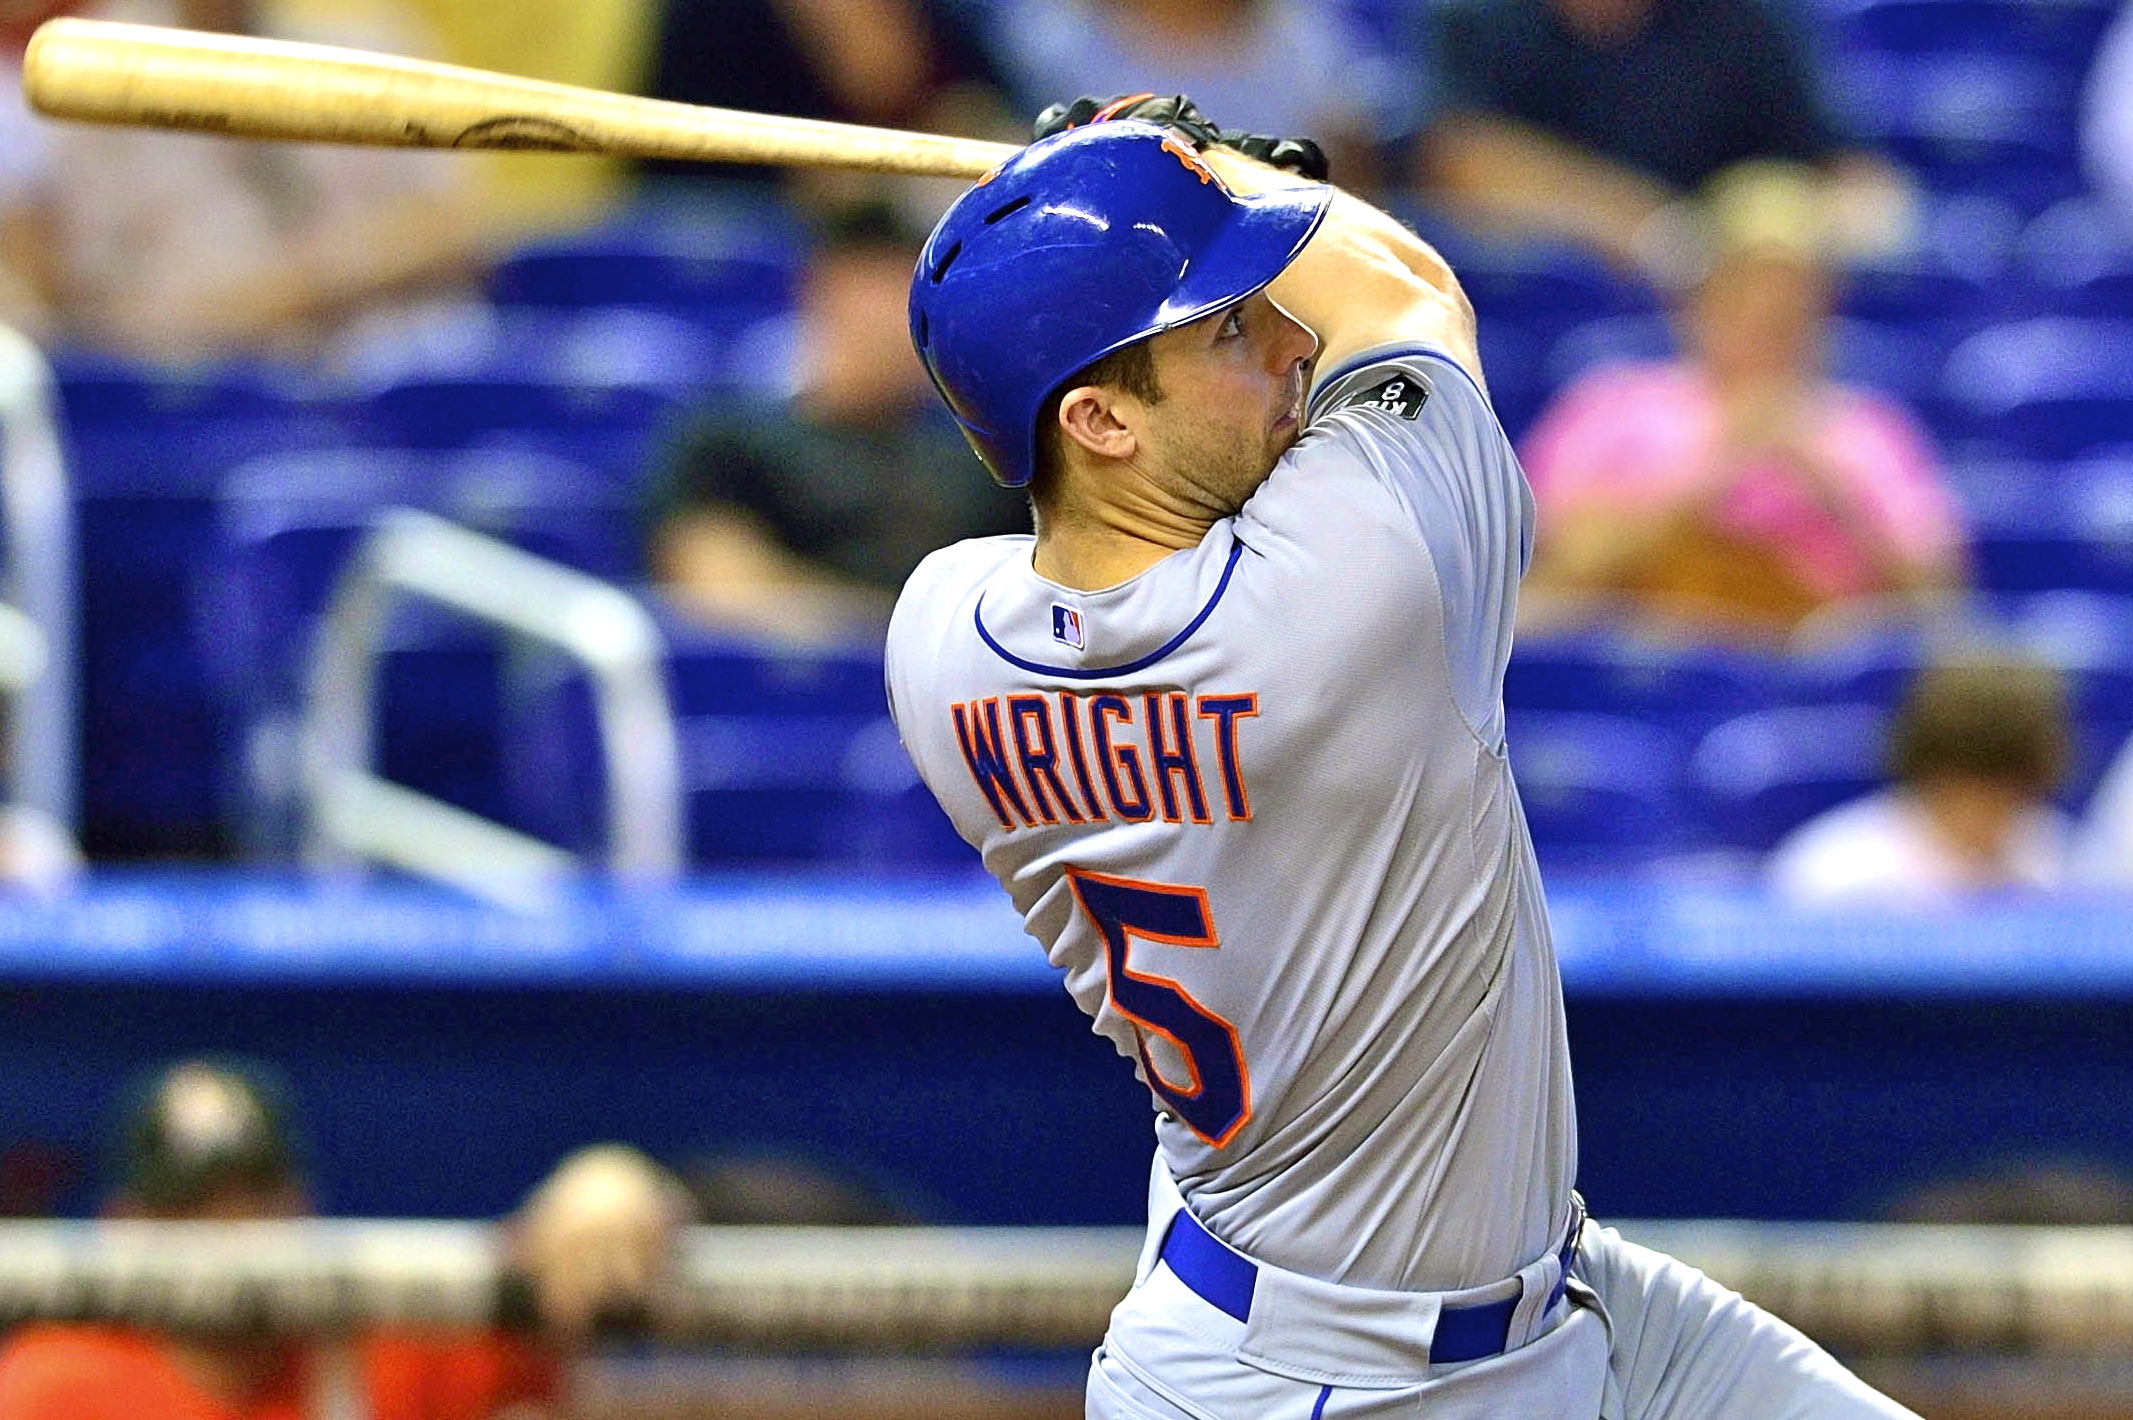 With eye on present, Mets third baseman David Wright avoids